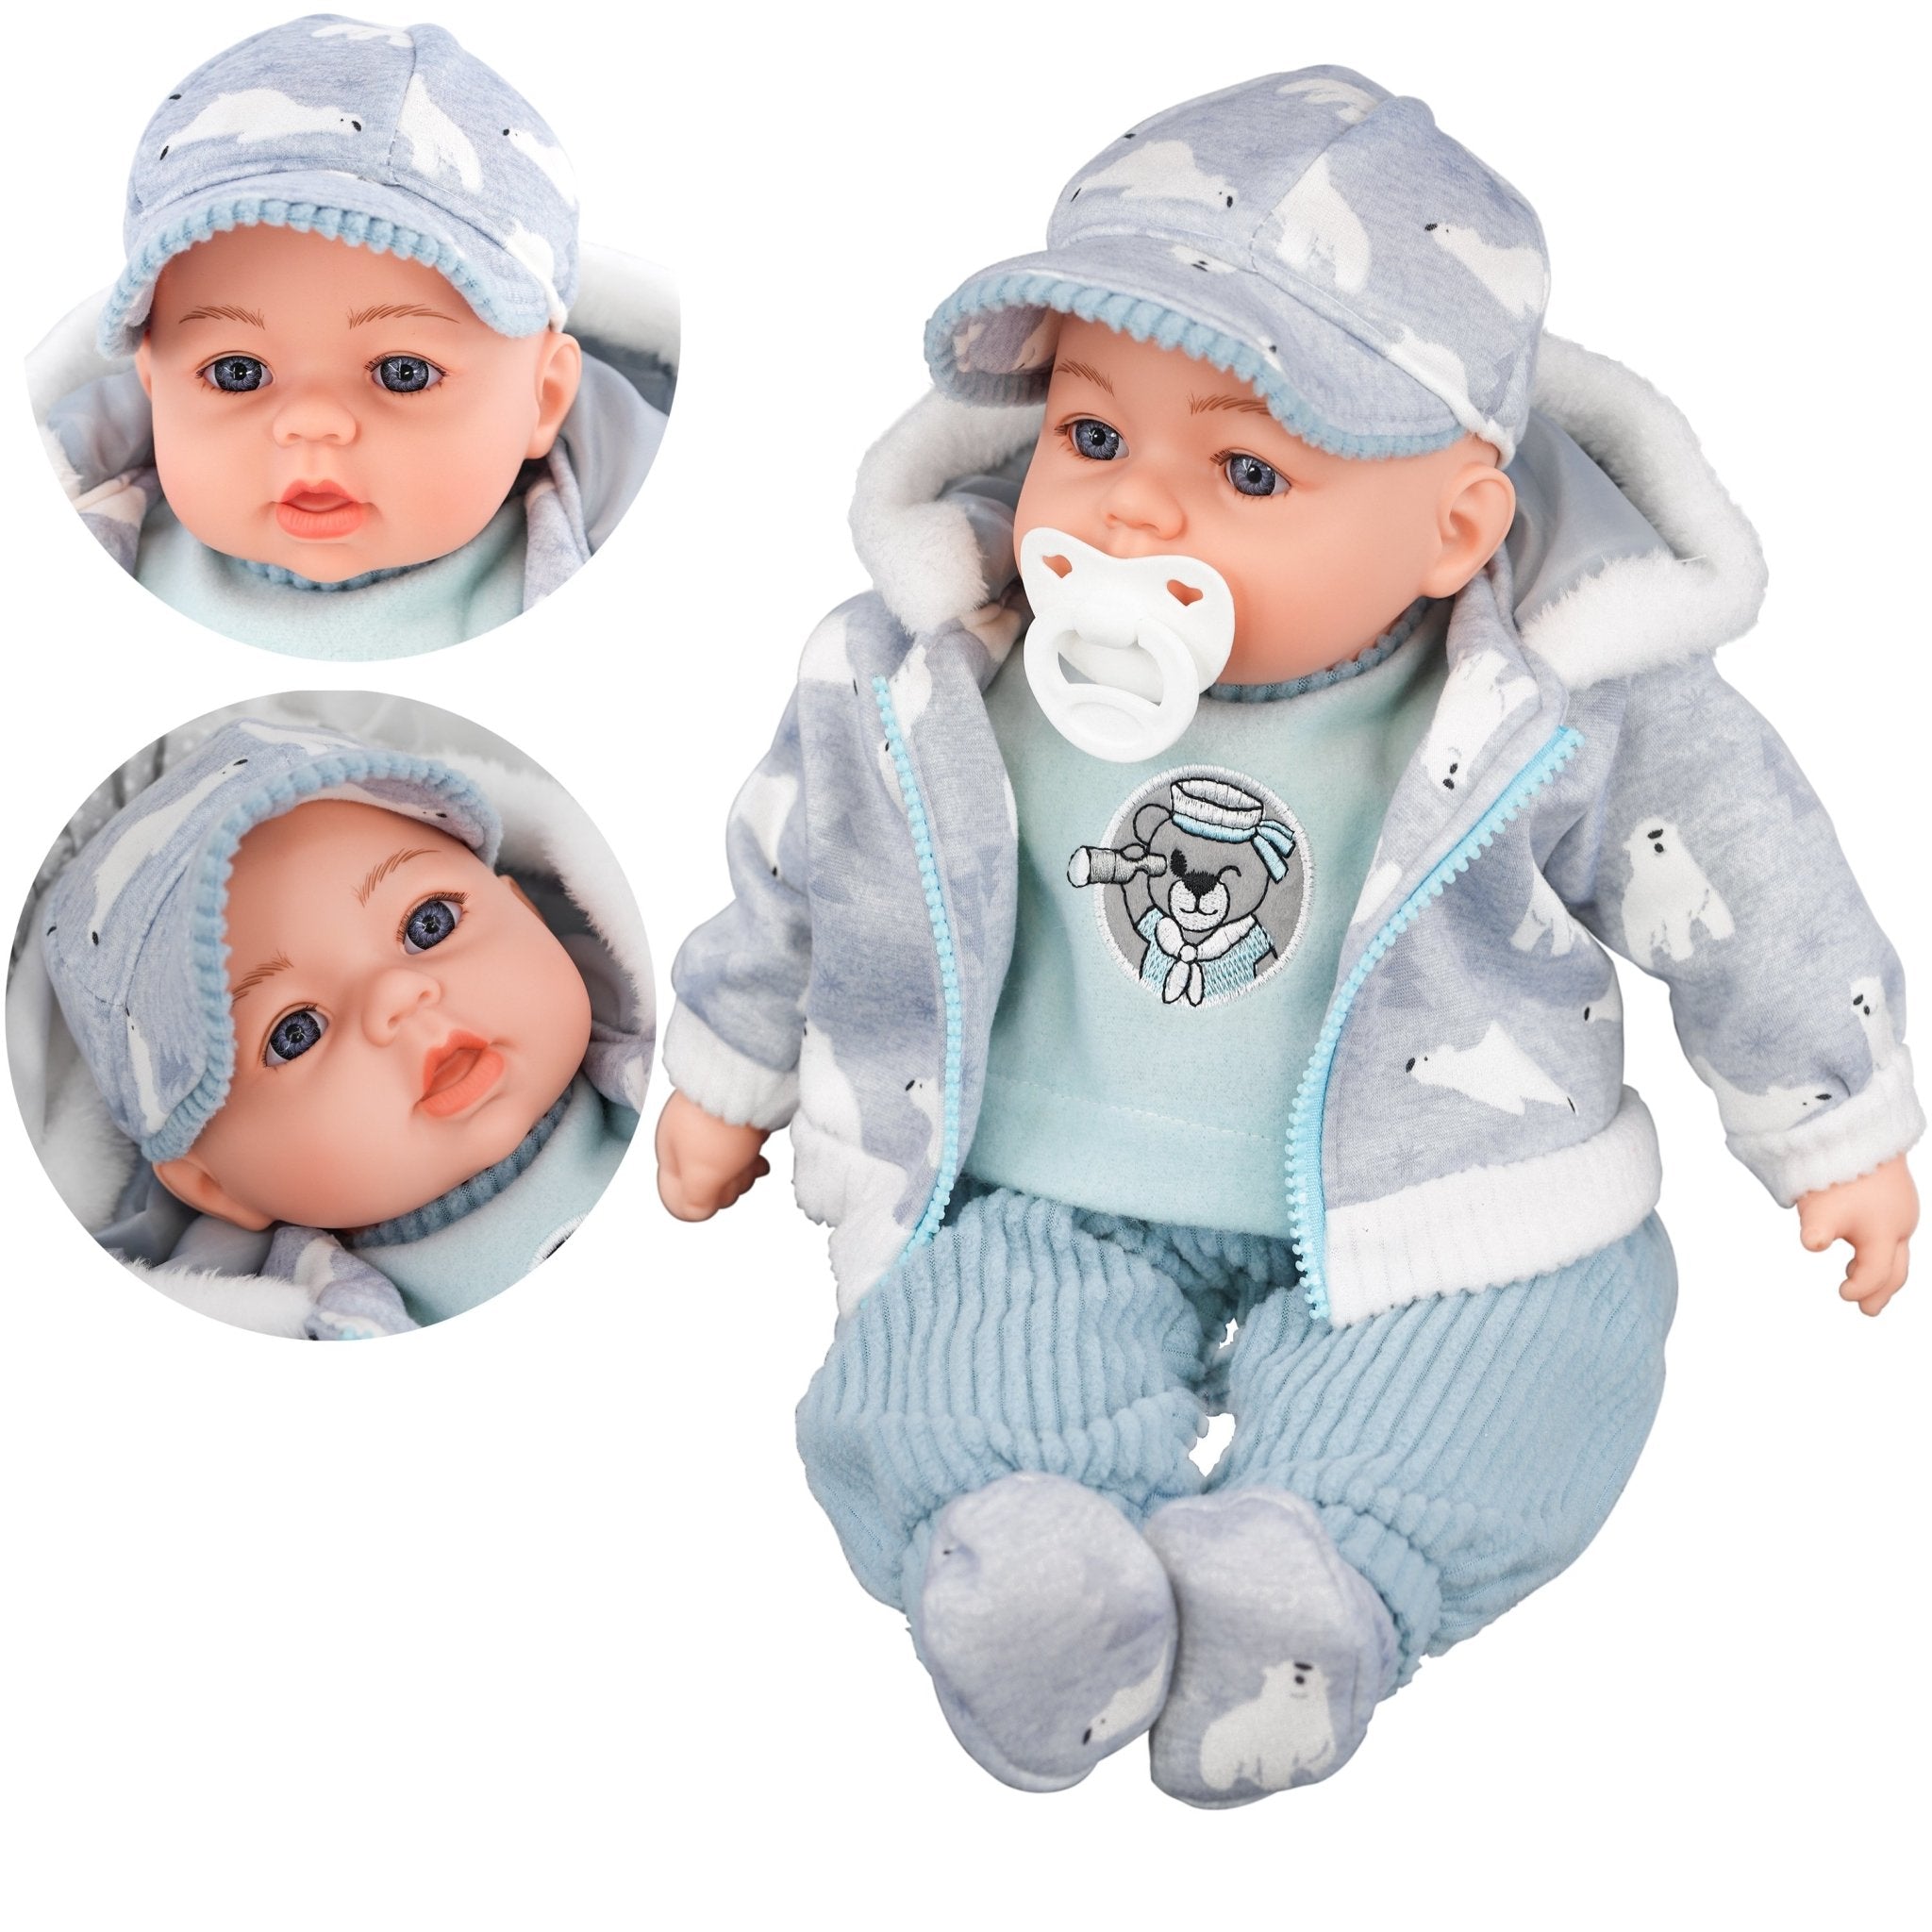 18" Soft Bodied Baby Doll Boys Toy BiBi Doll - The Magic Toy Shop